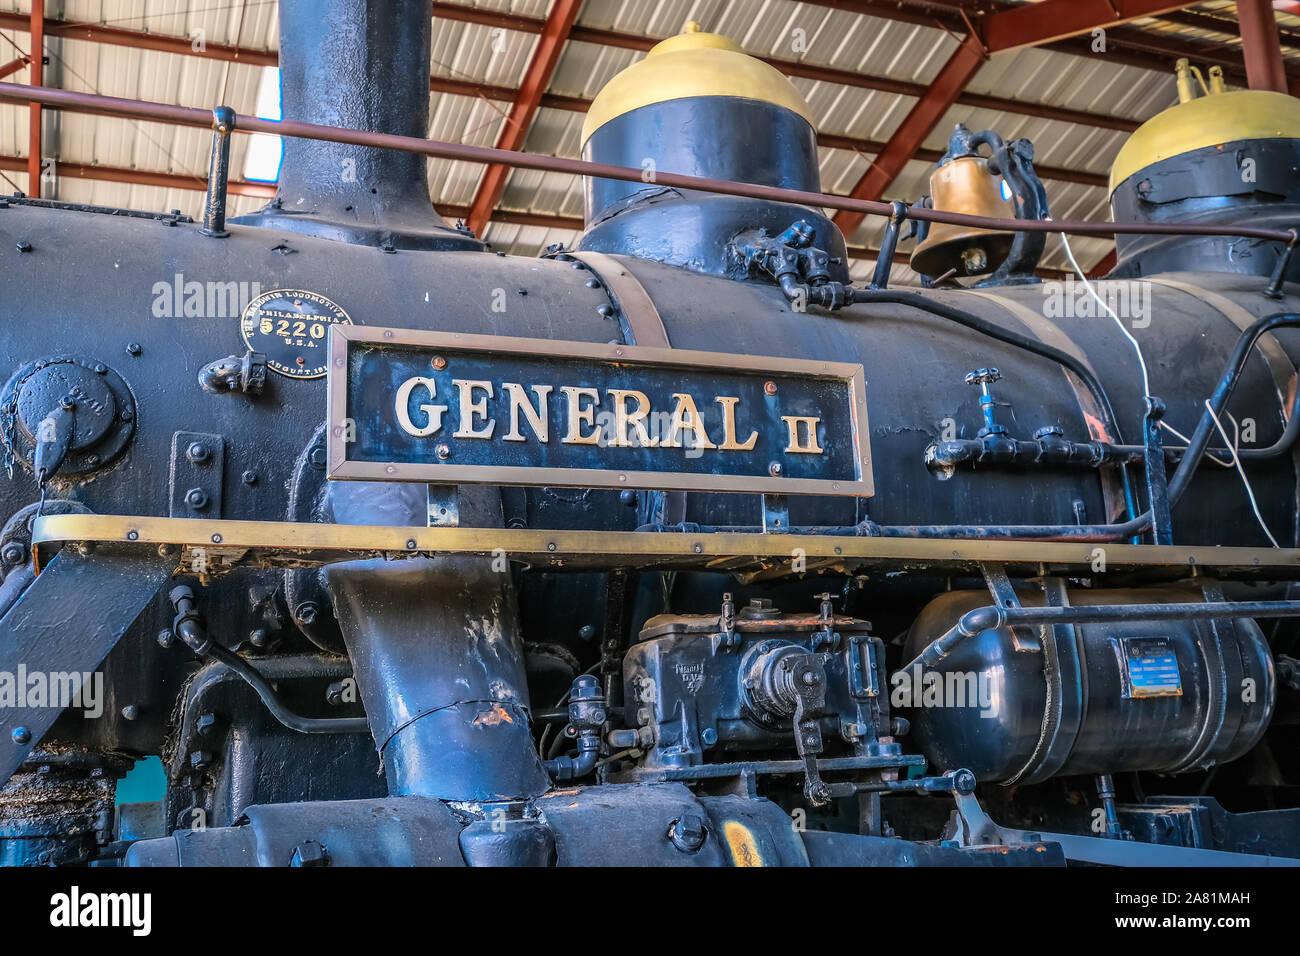 General II Locomotive Stock Photo